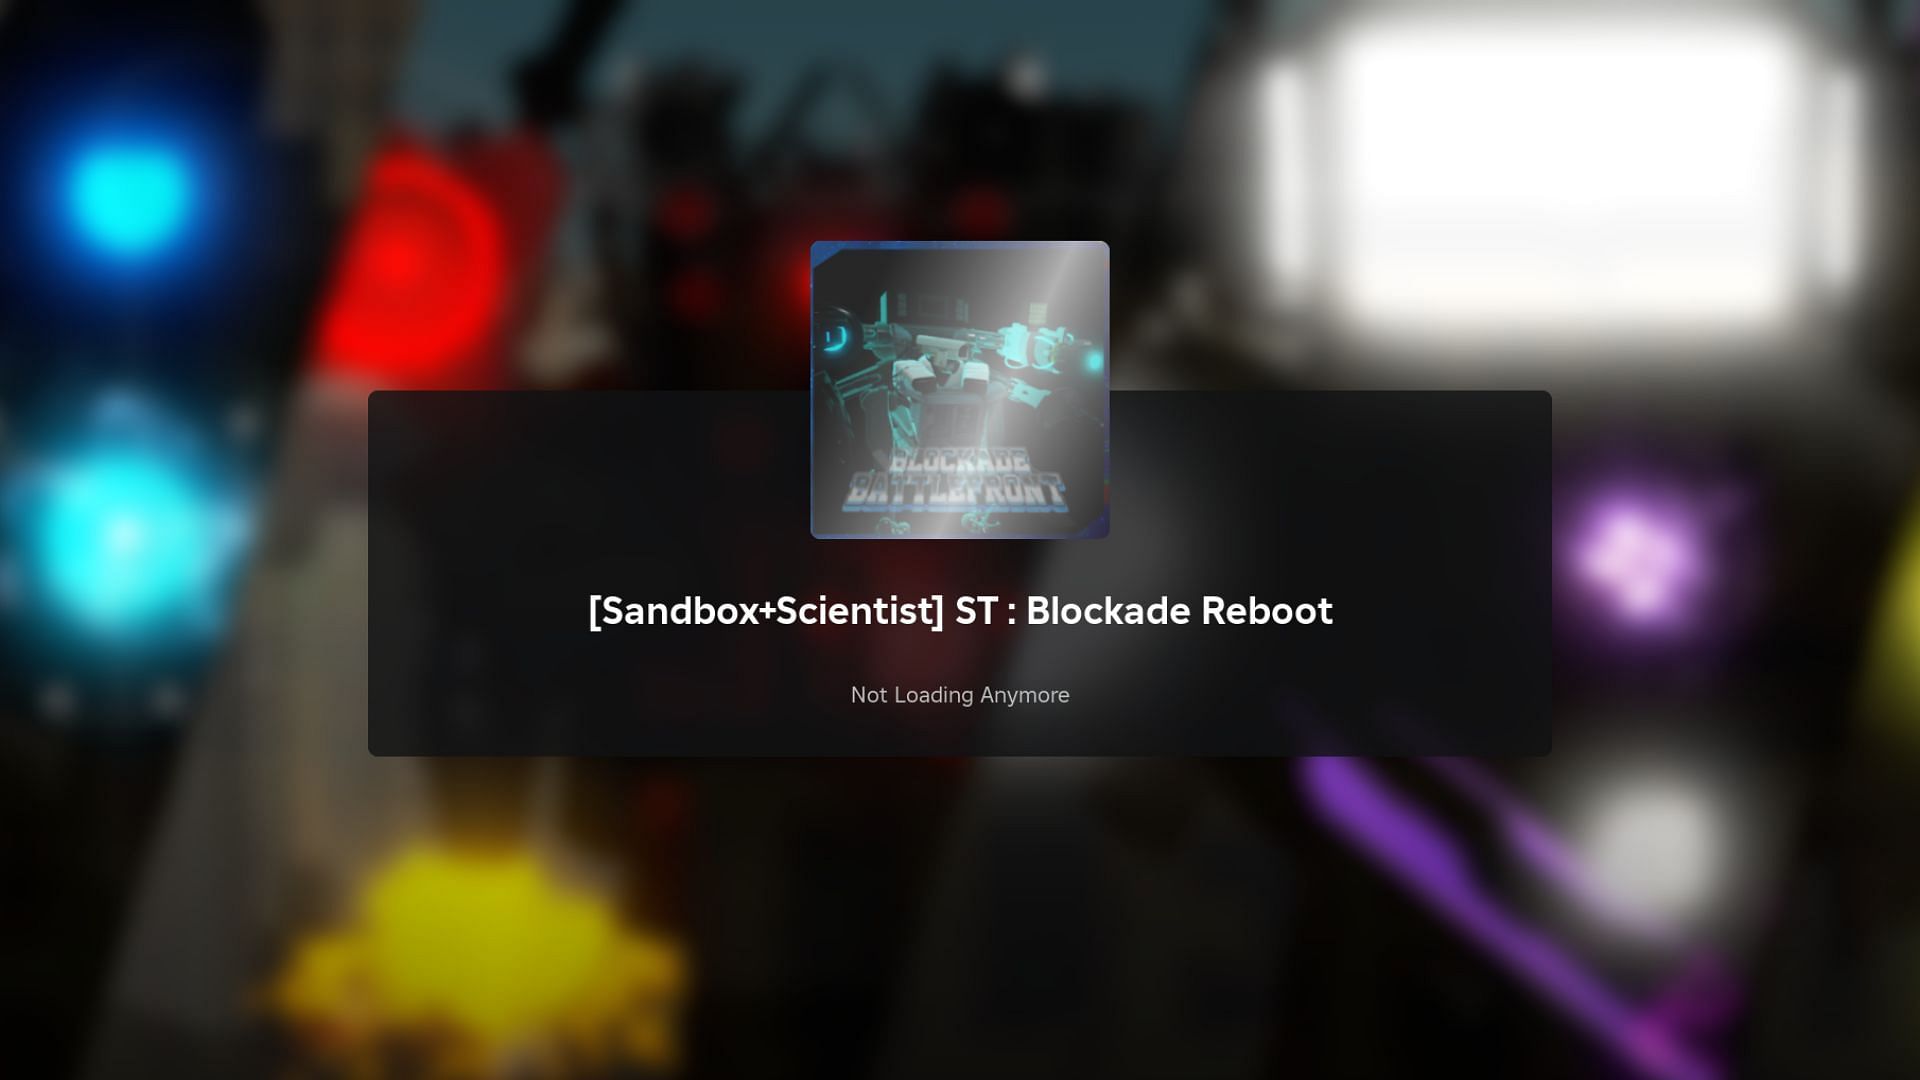 ST: Blockade Reboot